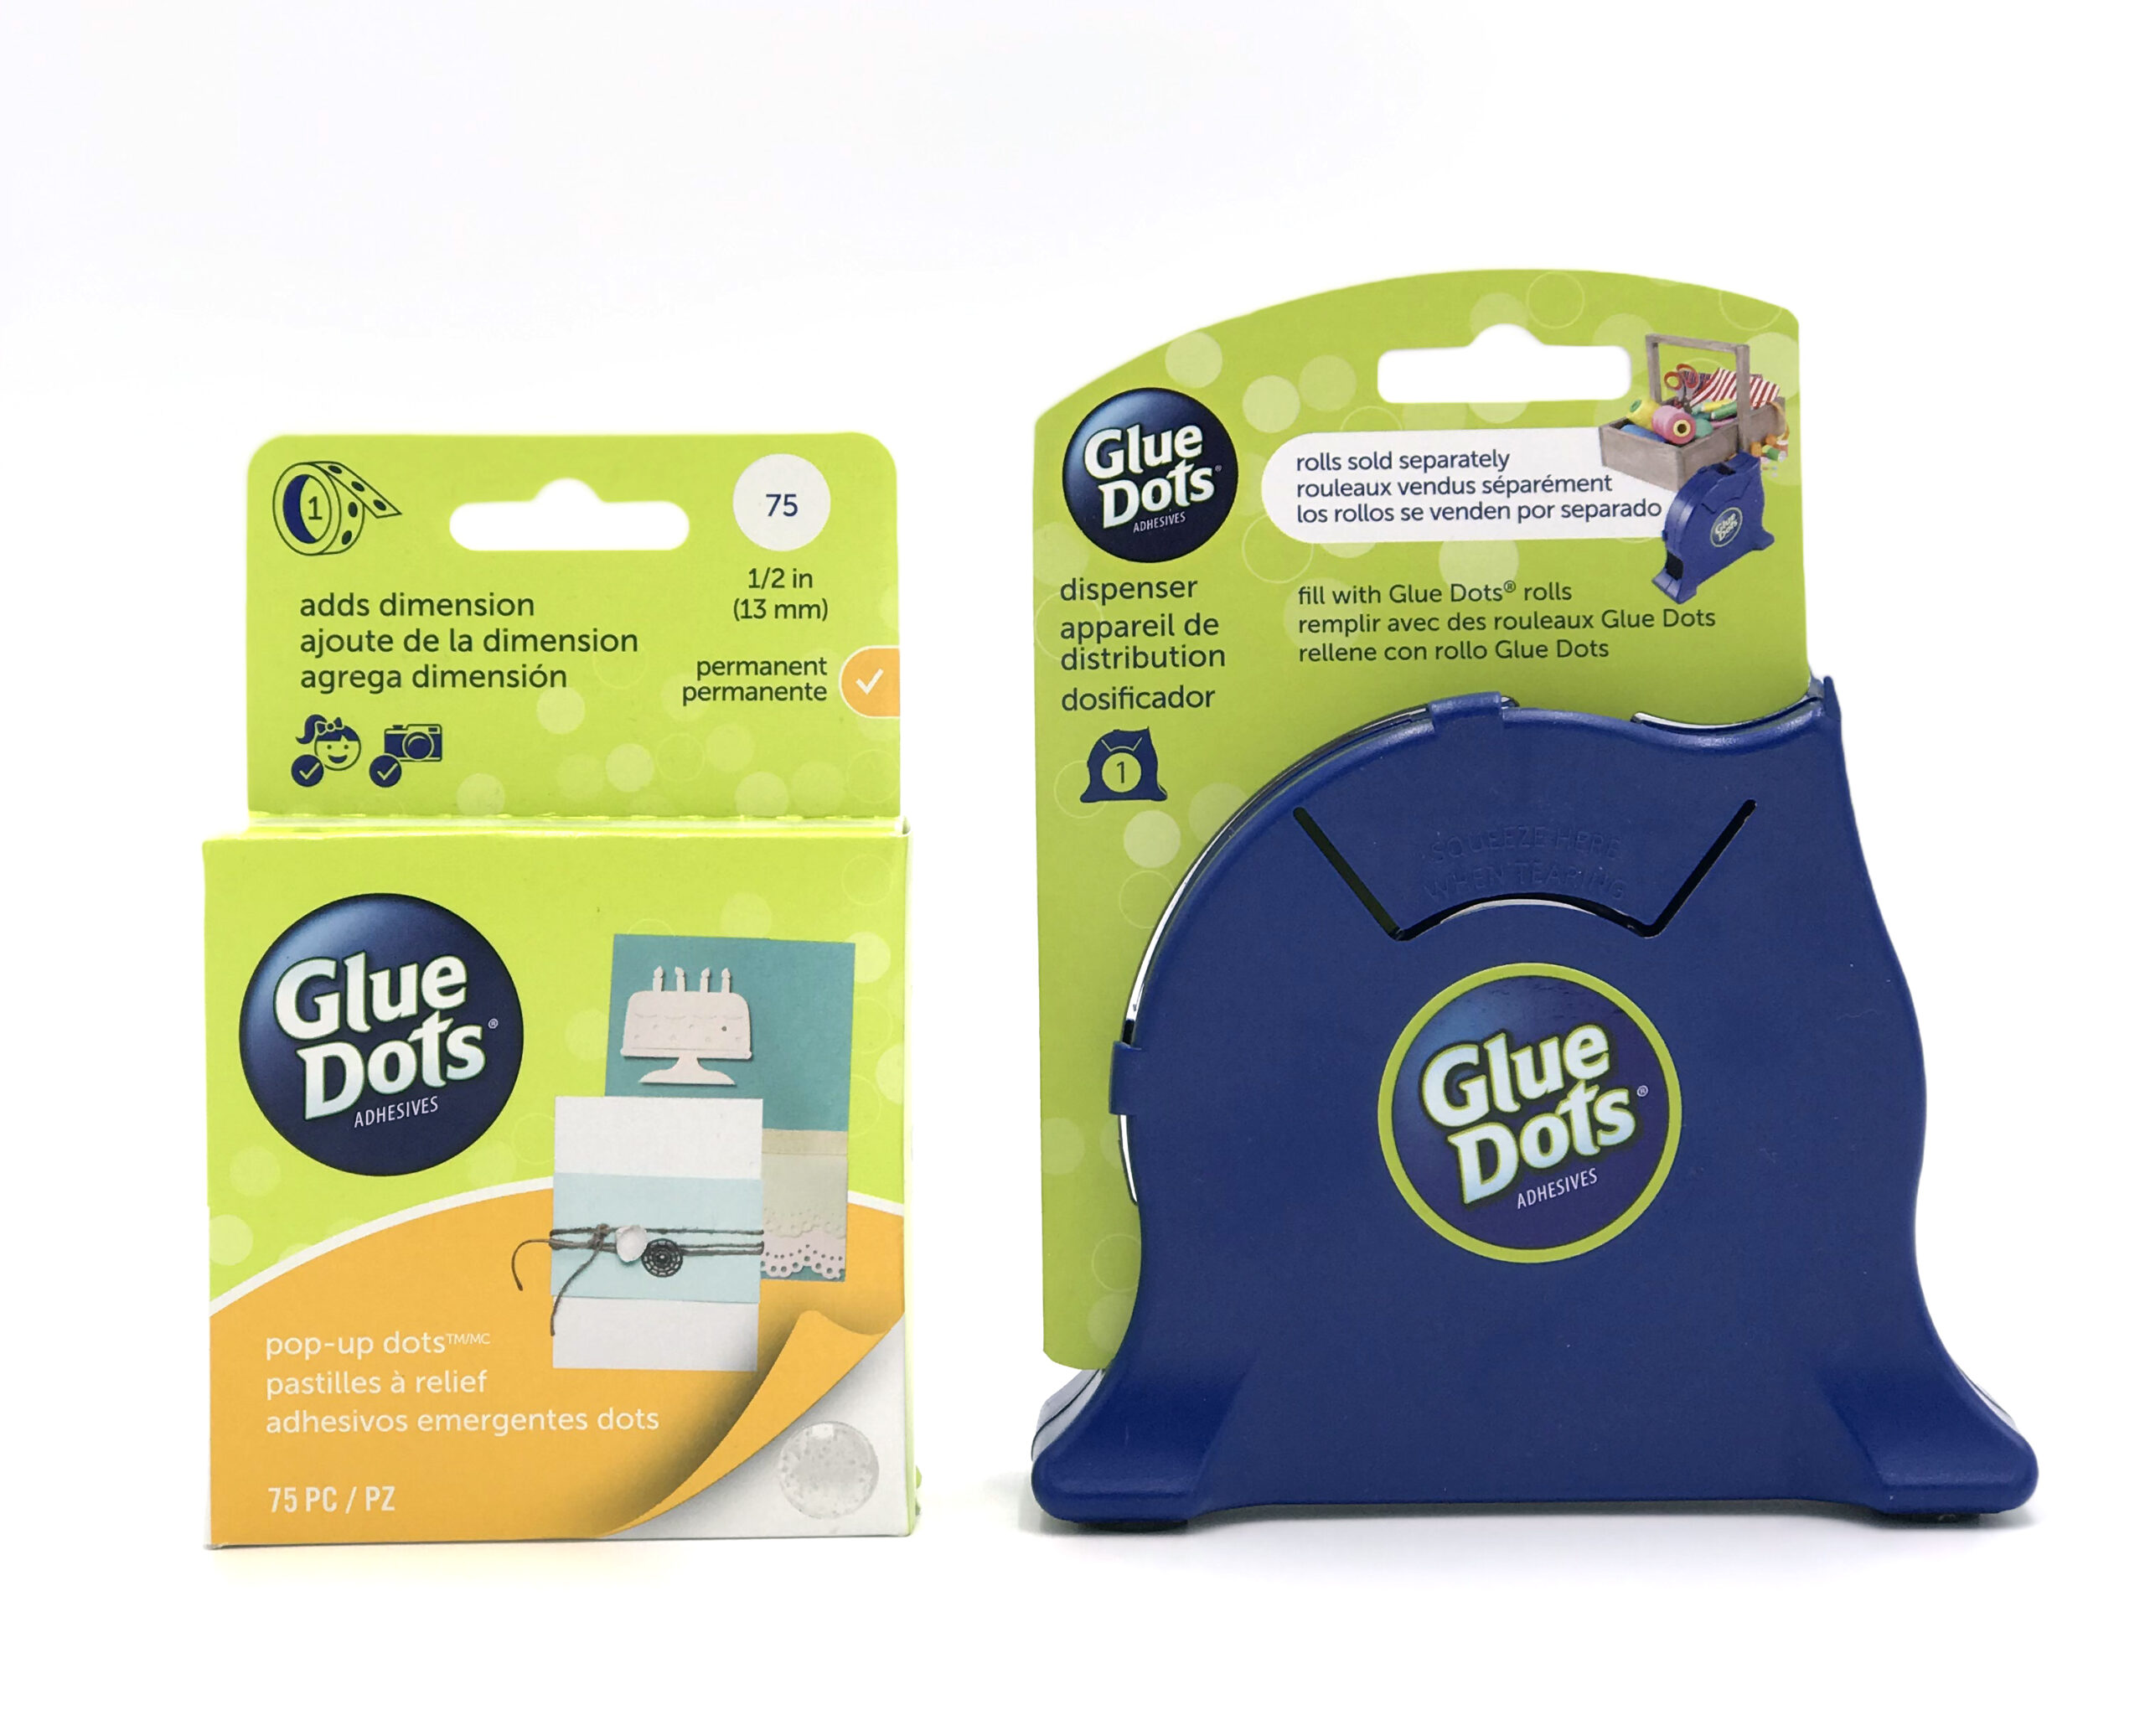 Glue Dtos Adhesives Pap-Up Dots and Dispenser